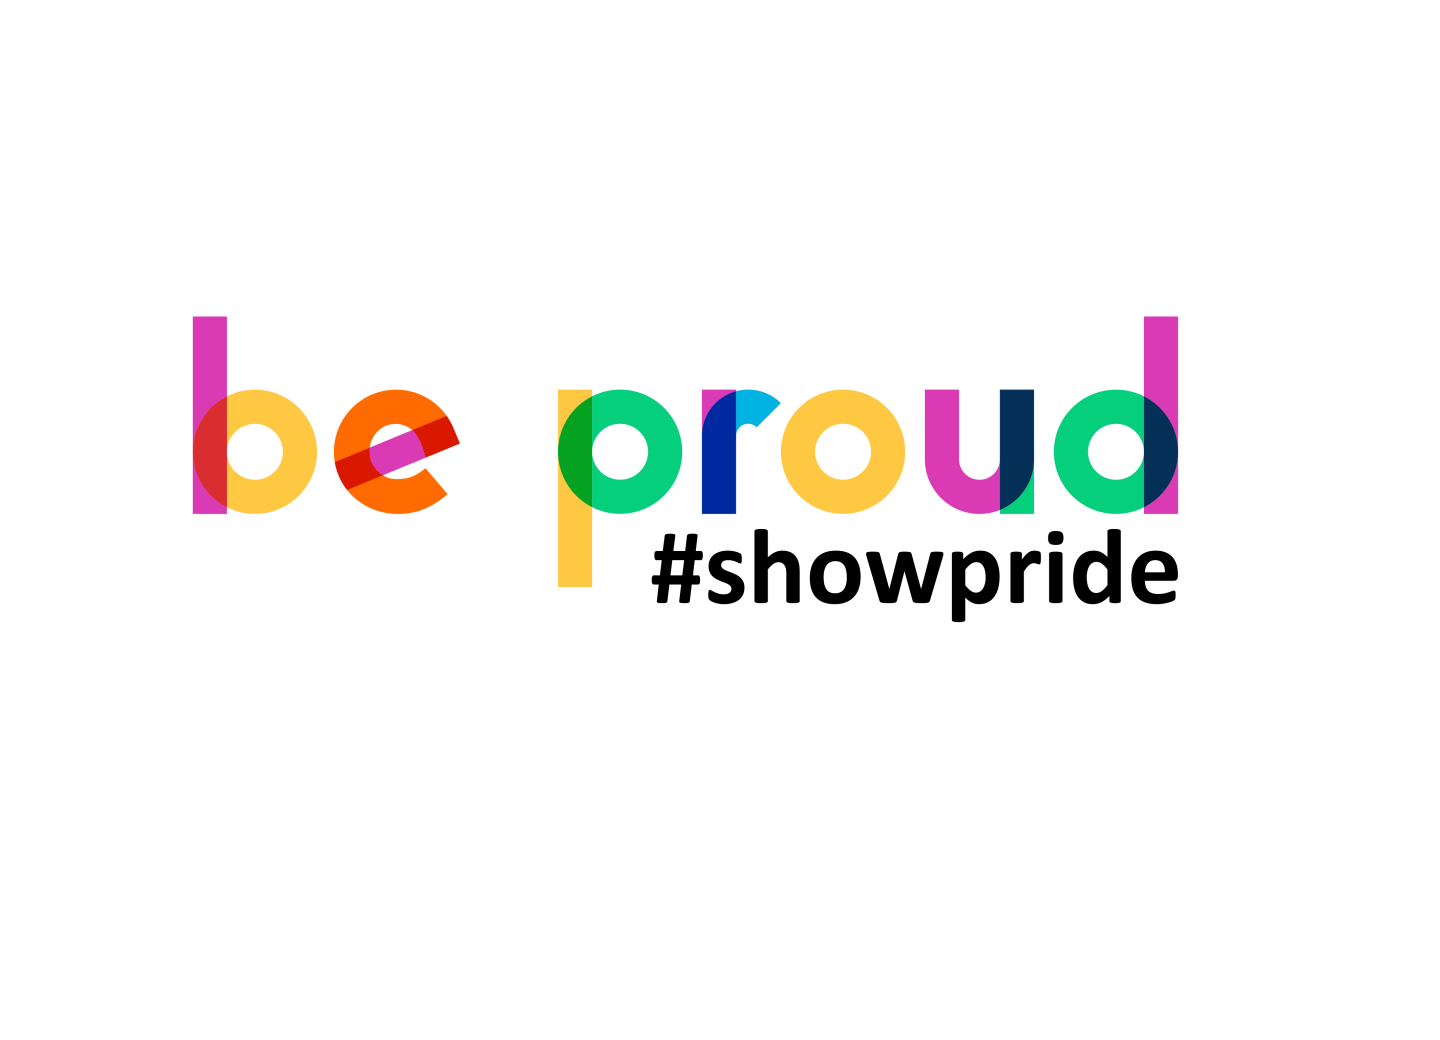 be proud!